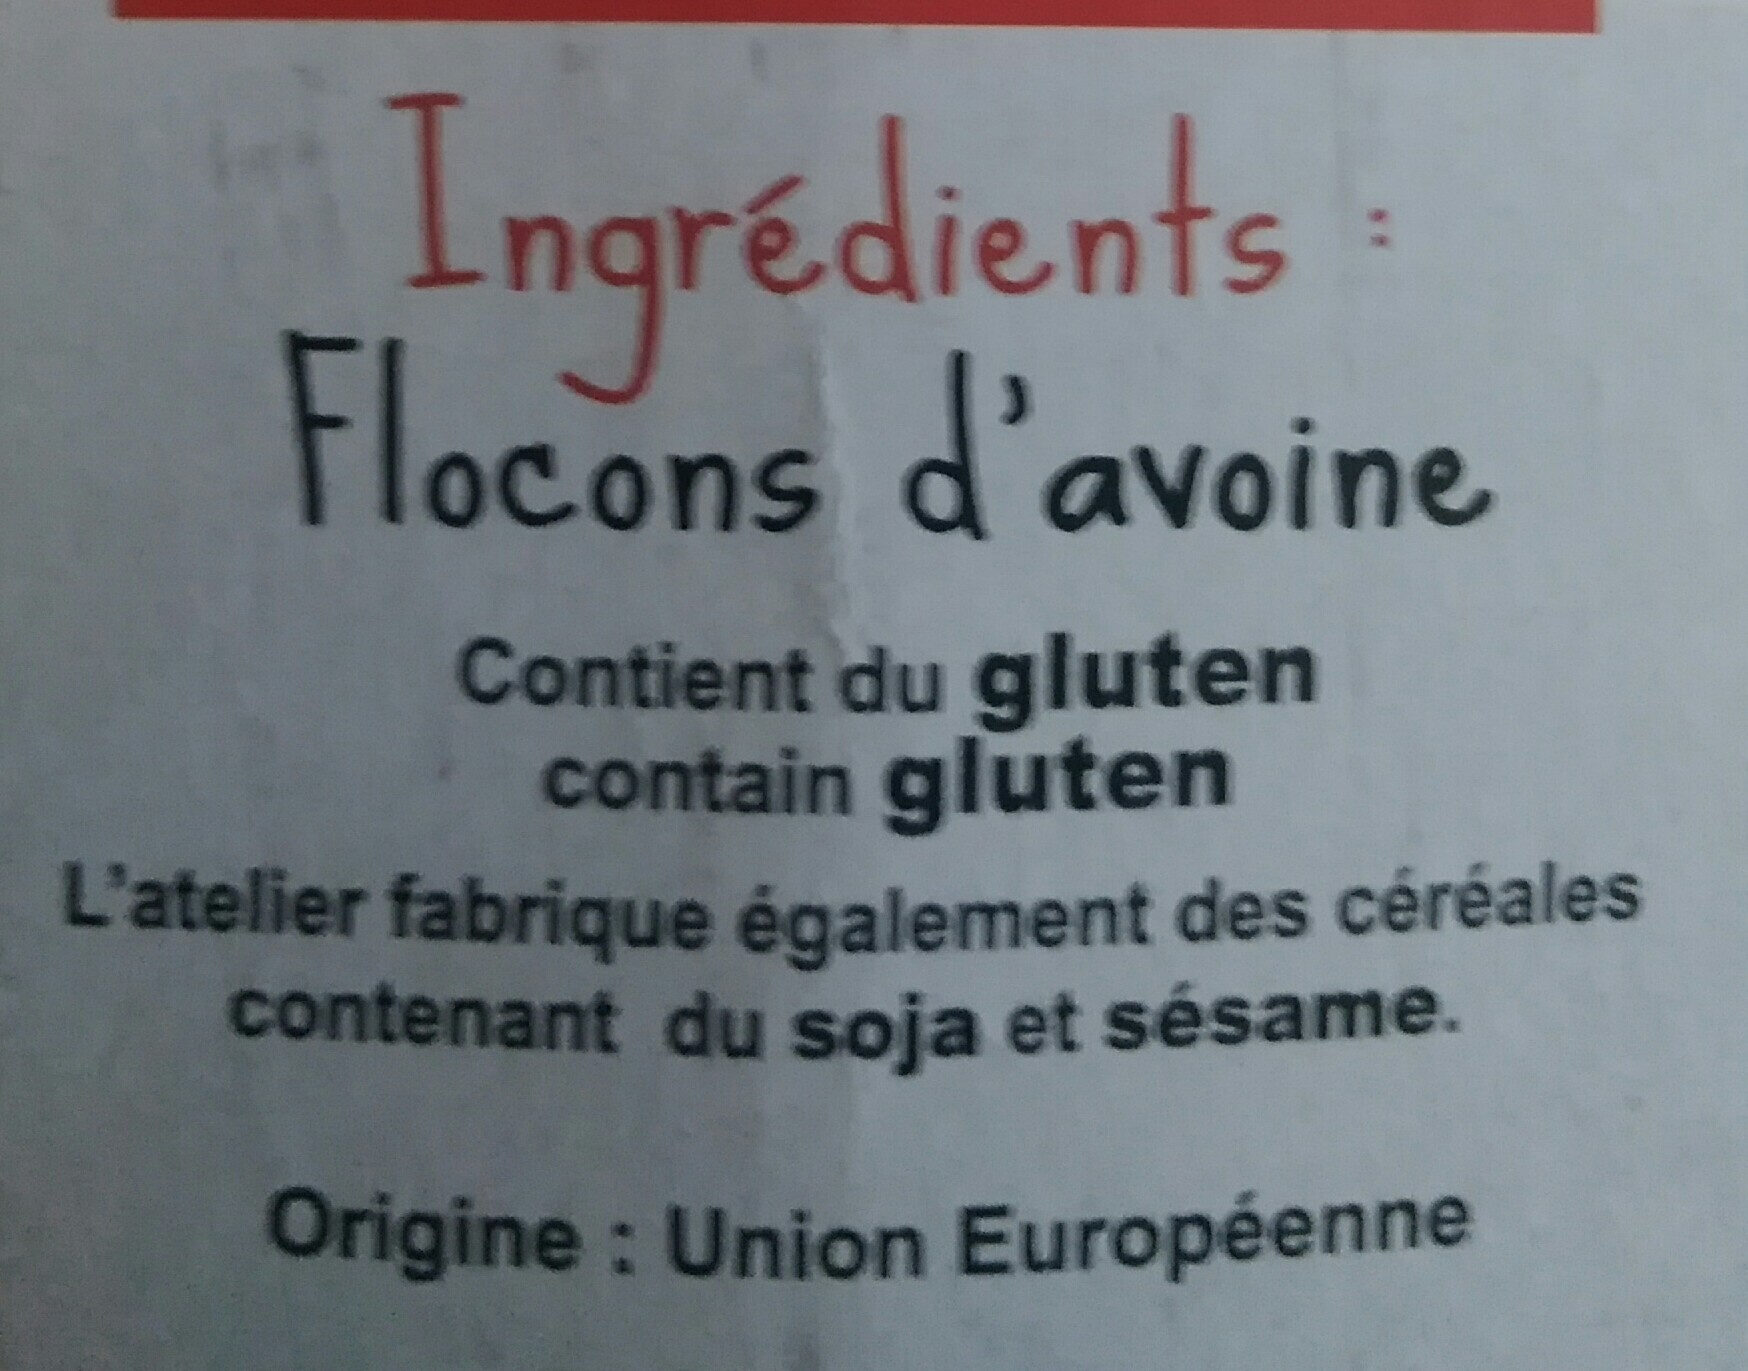 Flocons d'avoine - Ingredients - fr